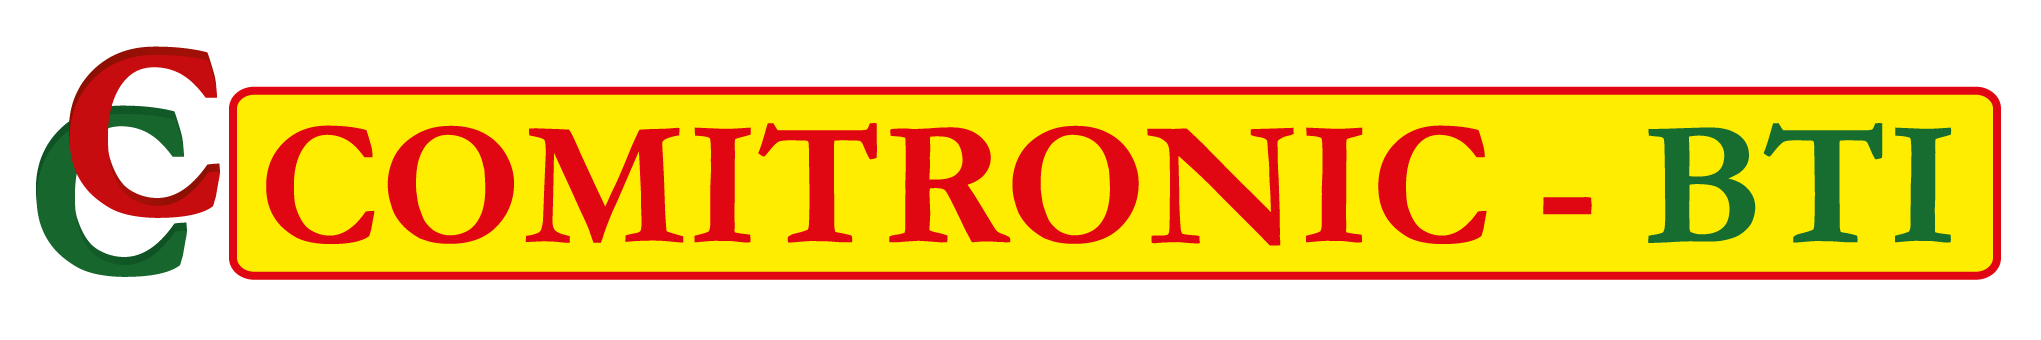 COMITRONIC-BTI Logo